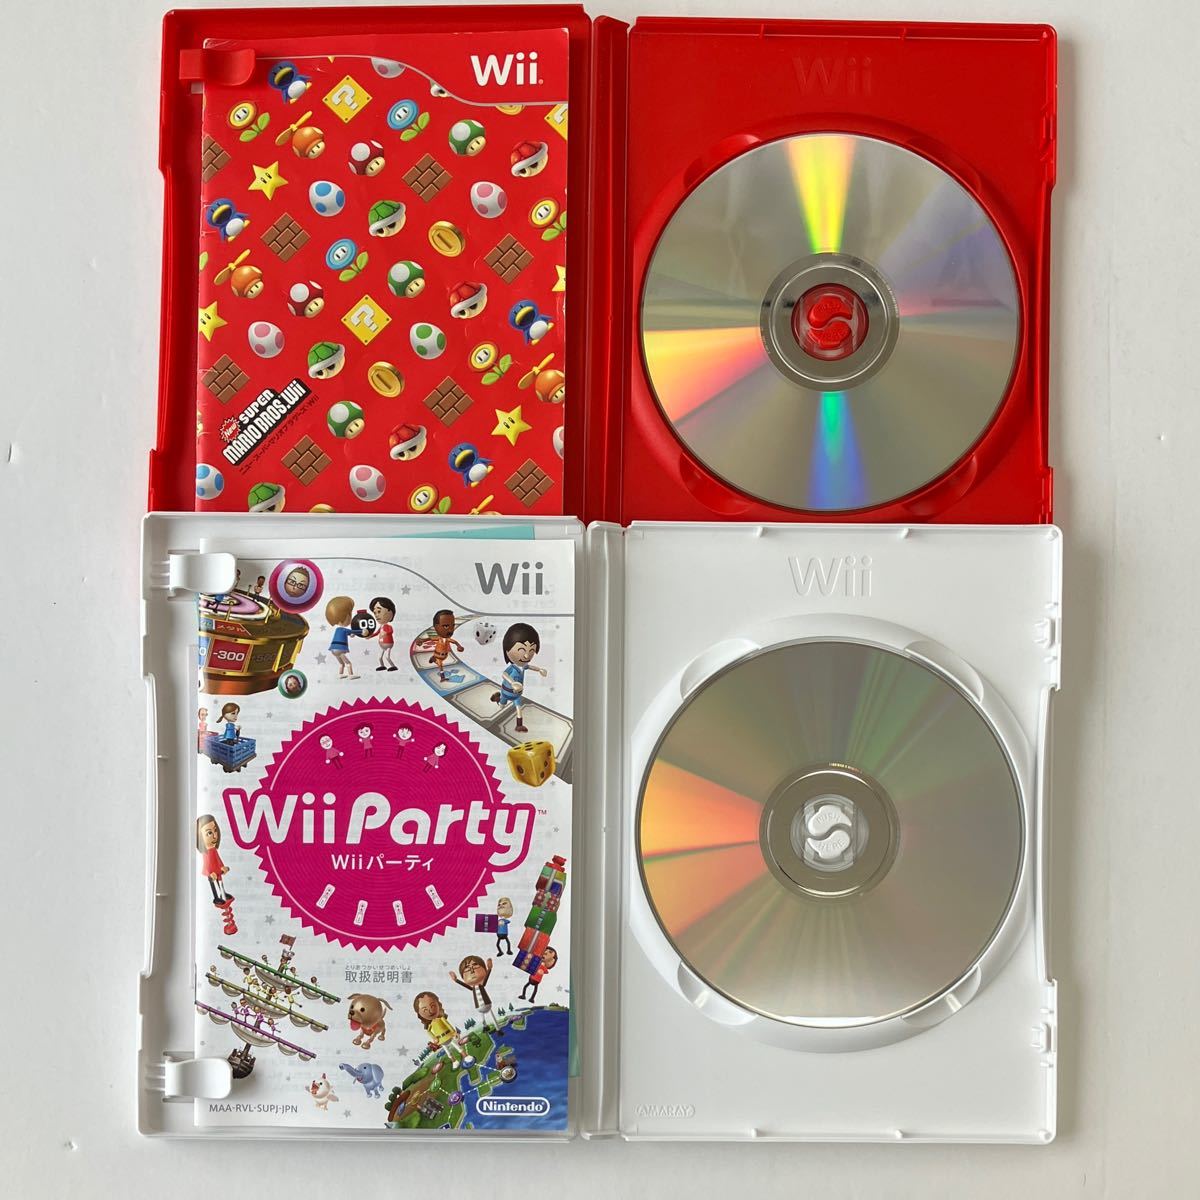 Wii New スーパーマリオブラザーズ +Wii Party セット